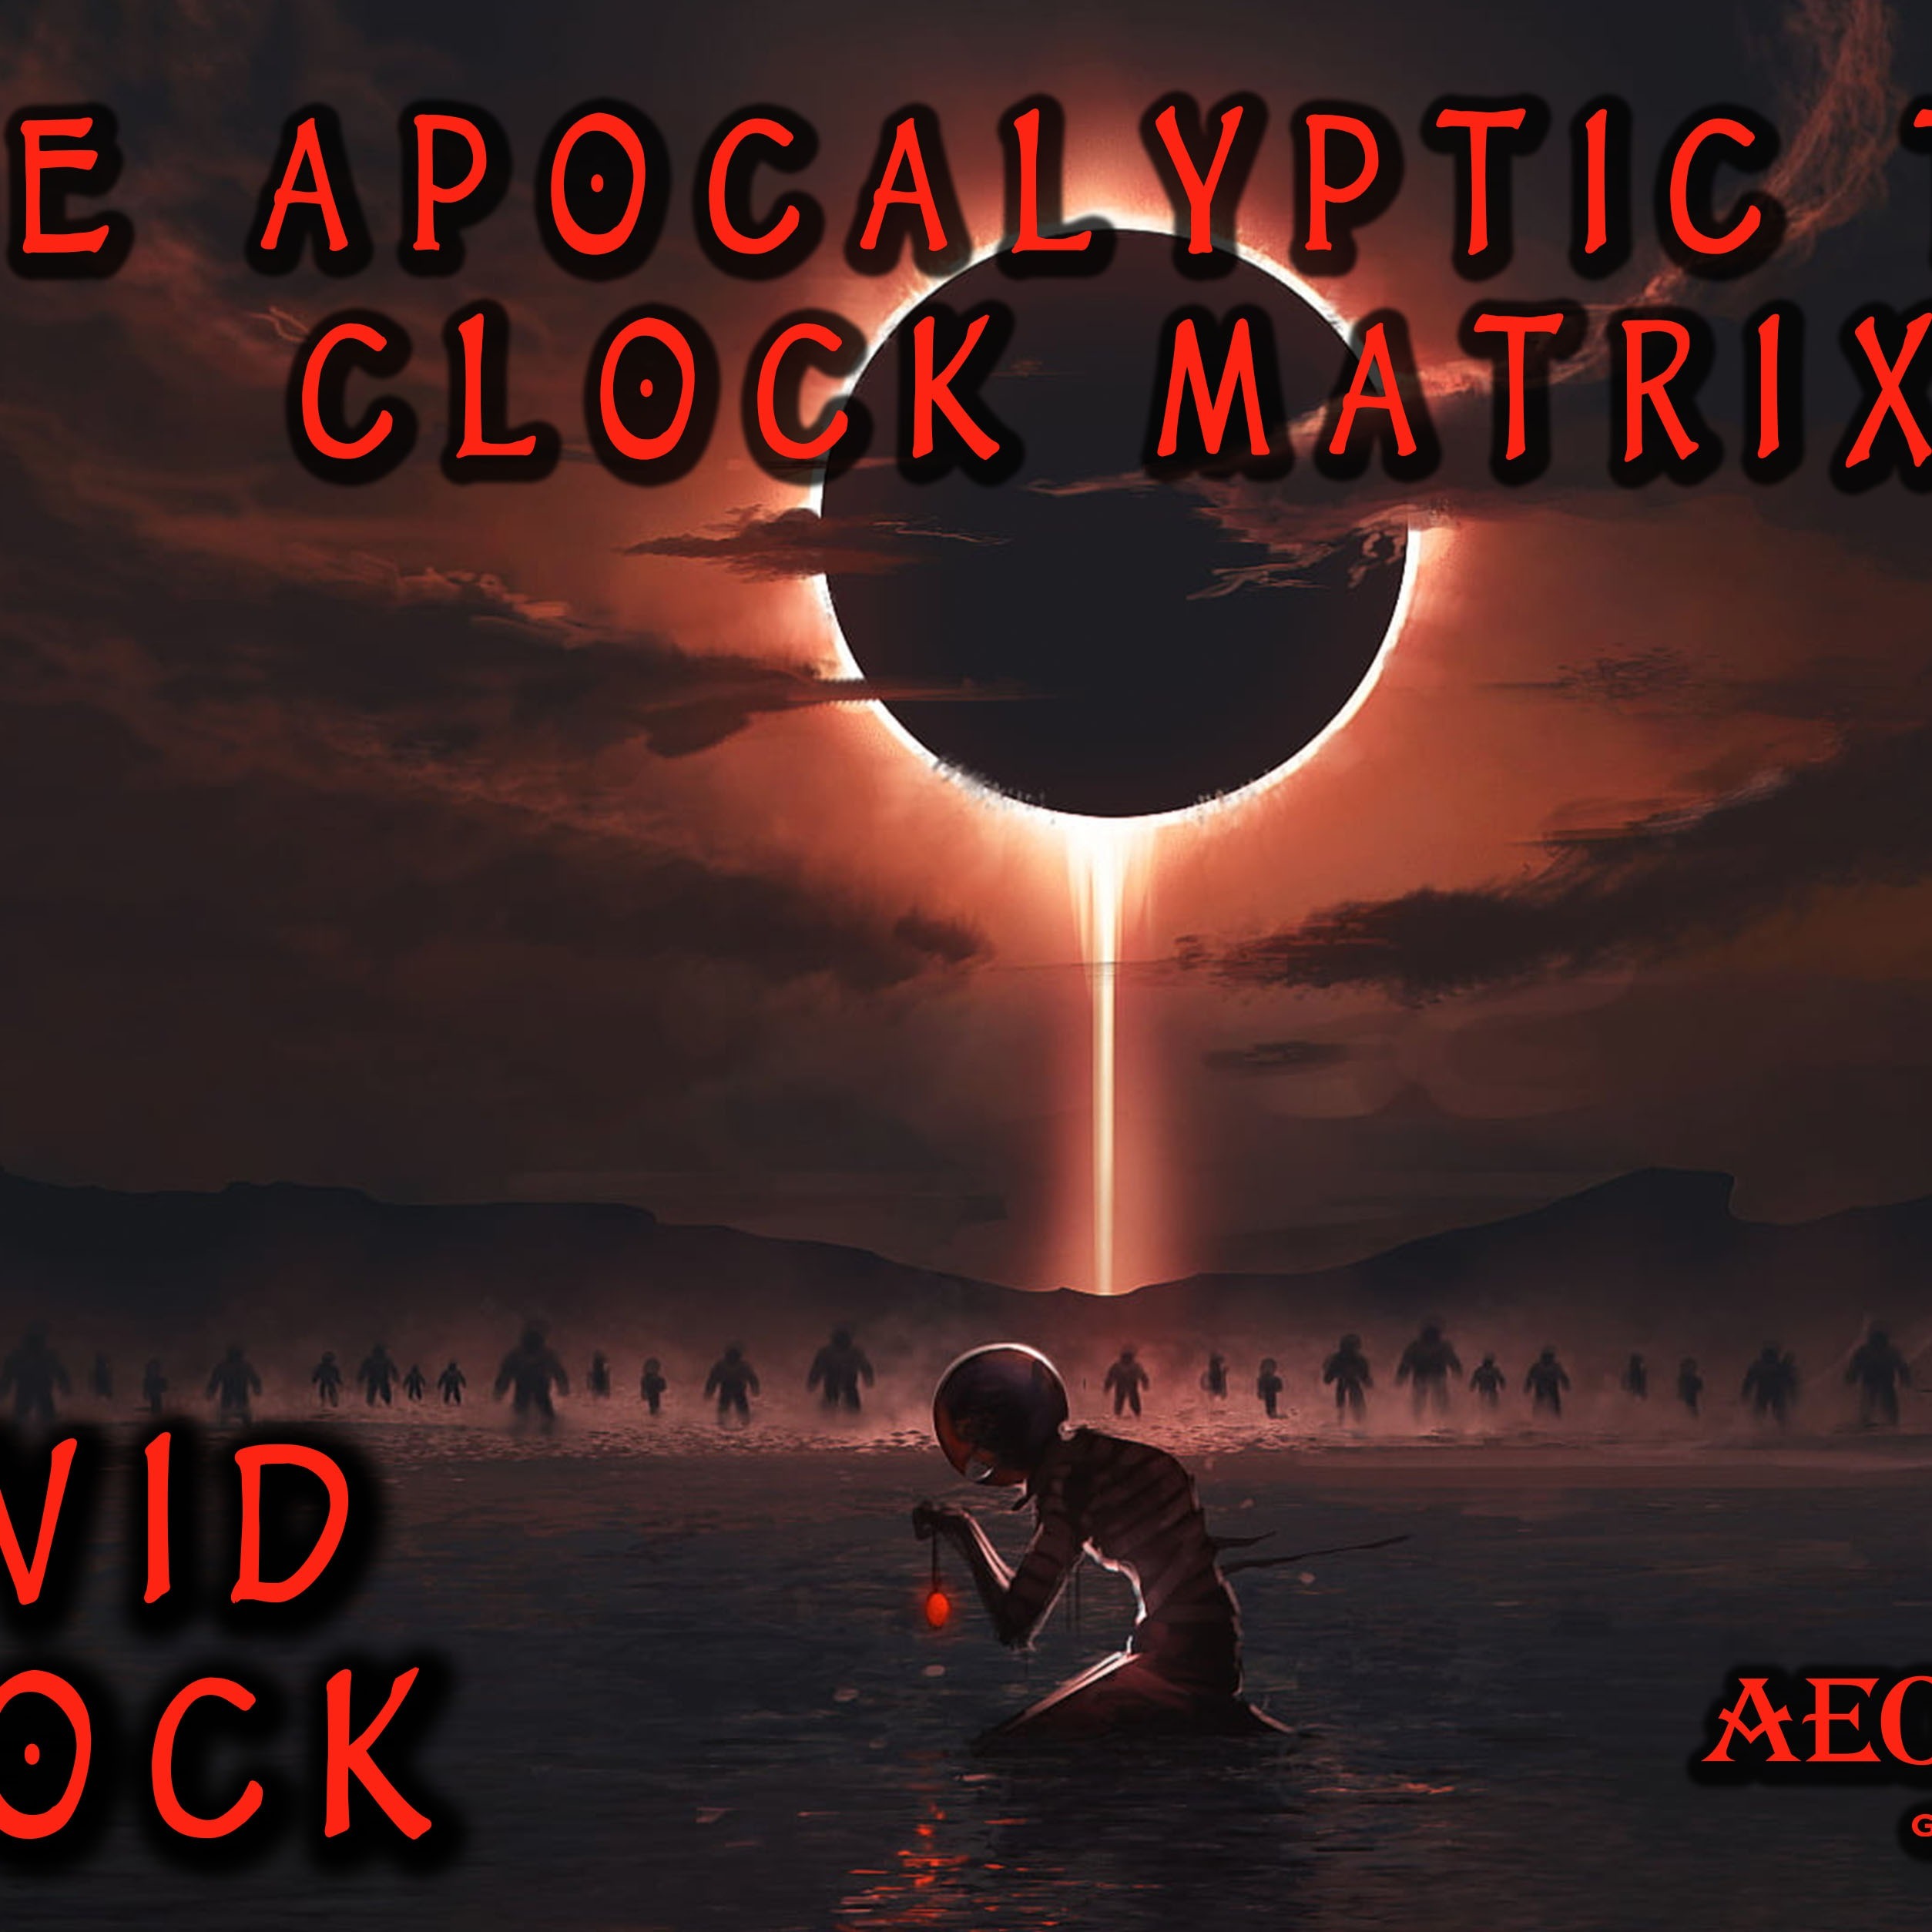 David Block on The Apocalyptic Time Clock Matrix